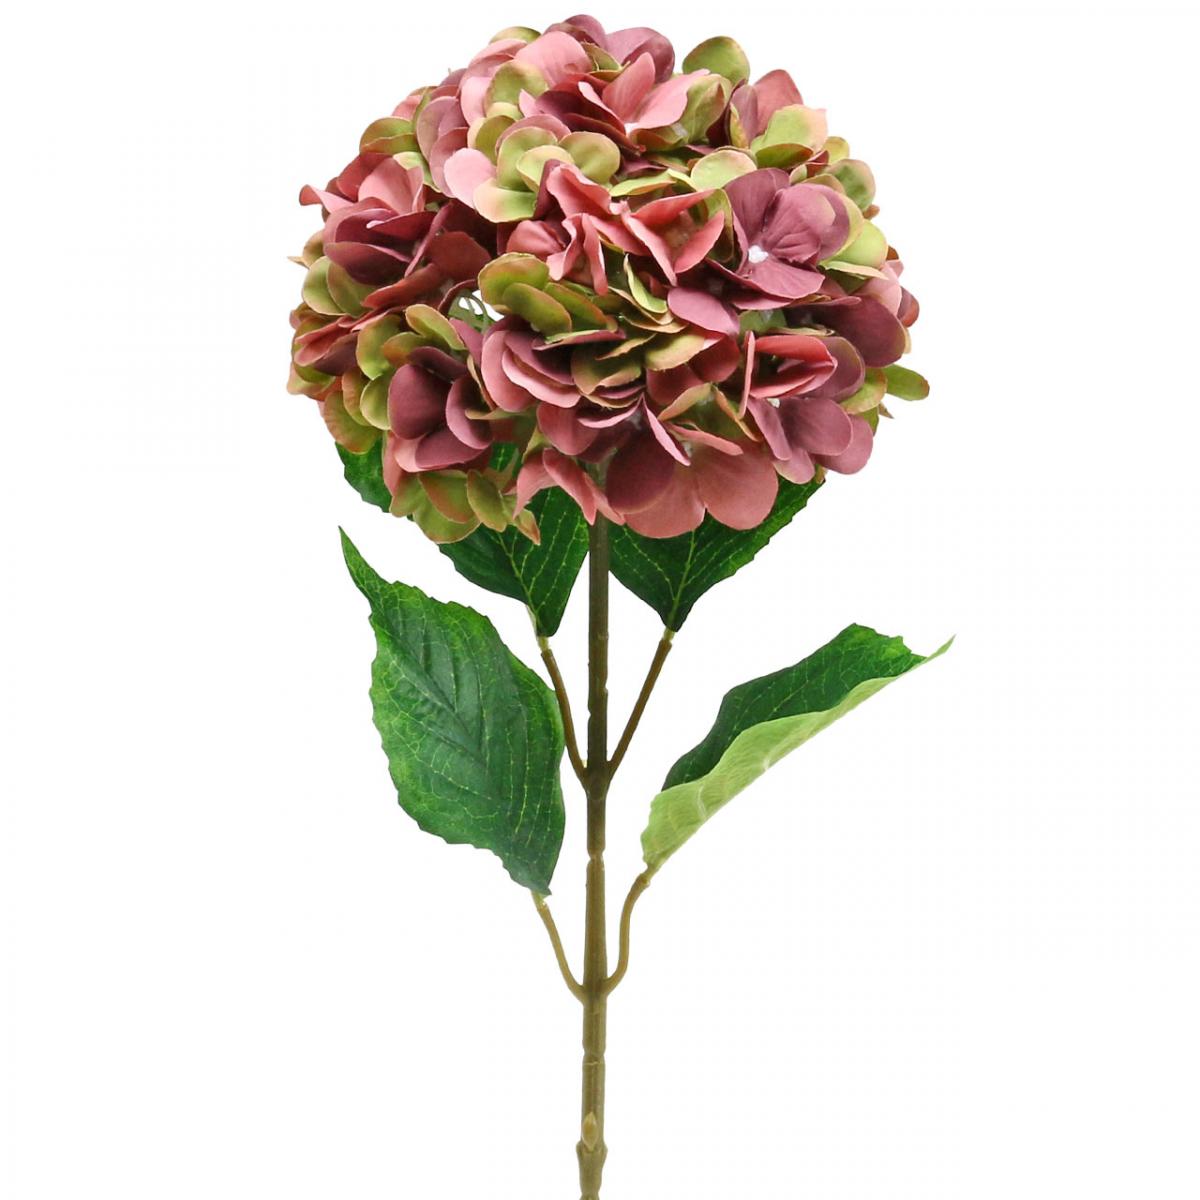 Bordeaux Kunstblume Rosa, 80cm-69802 Floristik24.de künstlich groß Hortensie